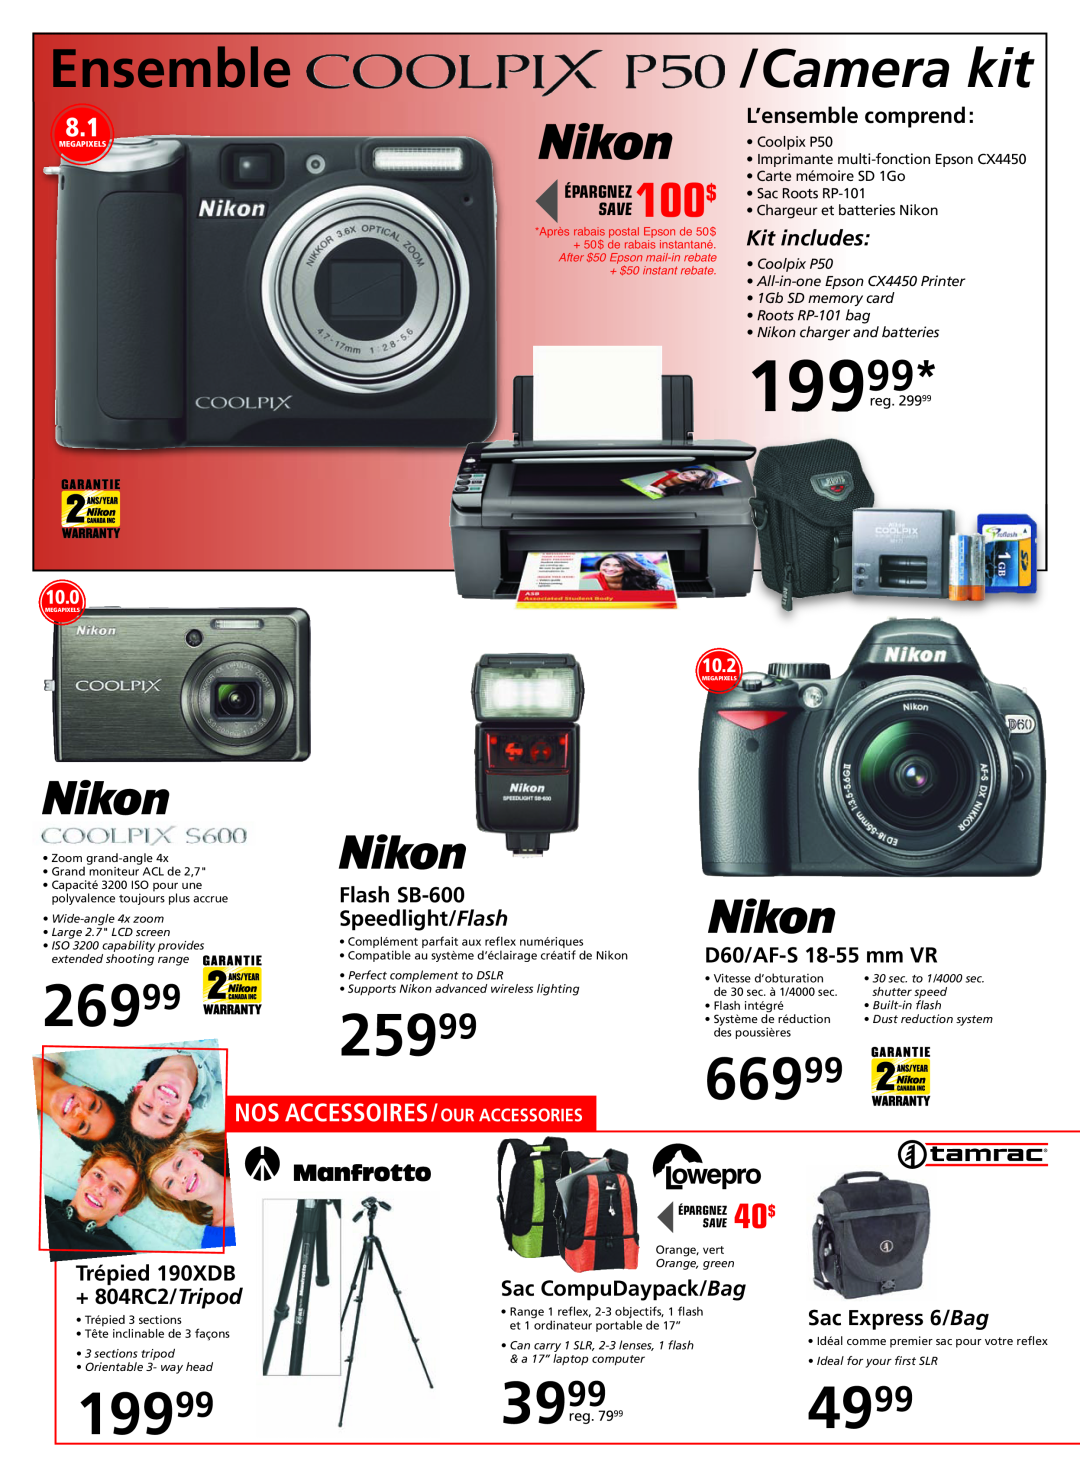 Nikon CX4450 19999, 26999, 25999, 66999, 4999, L’ensemble comprend, Kit includes, Flash SB-600 Speedlight/Flash, 10.0, reg 